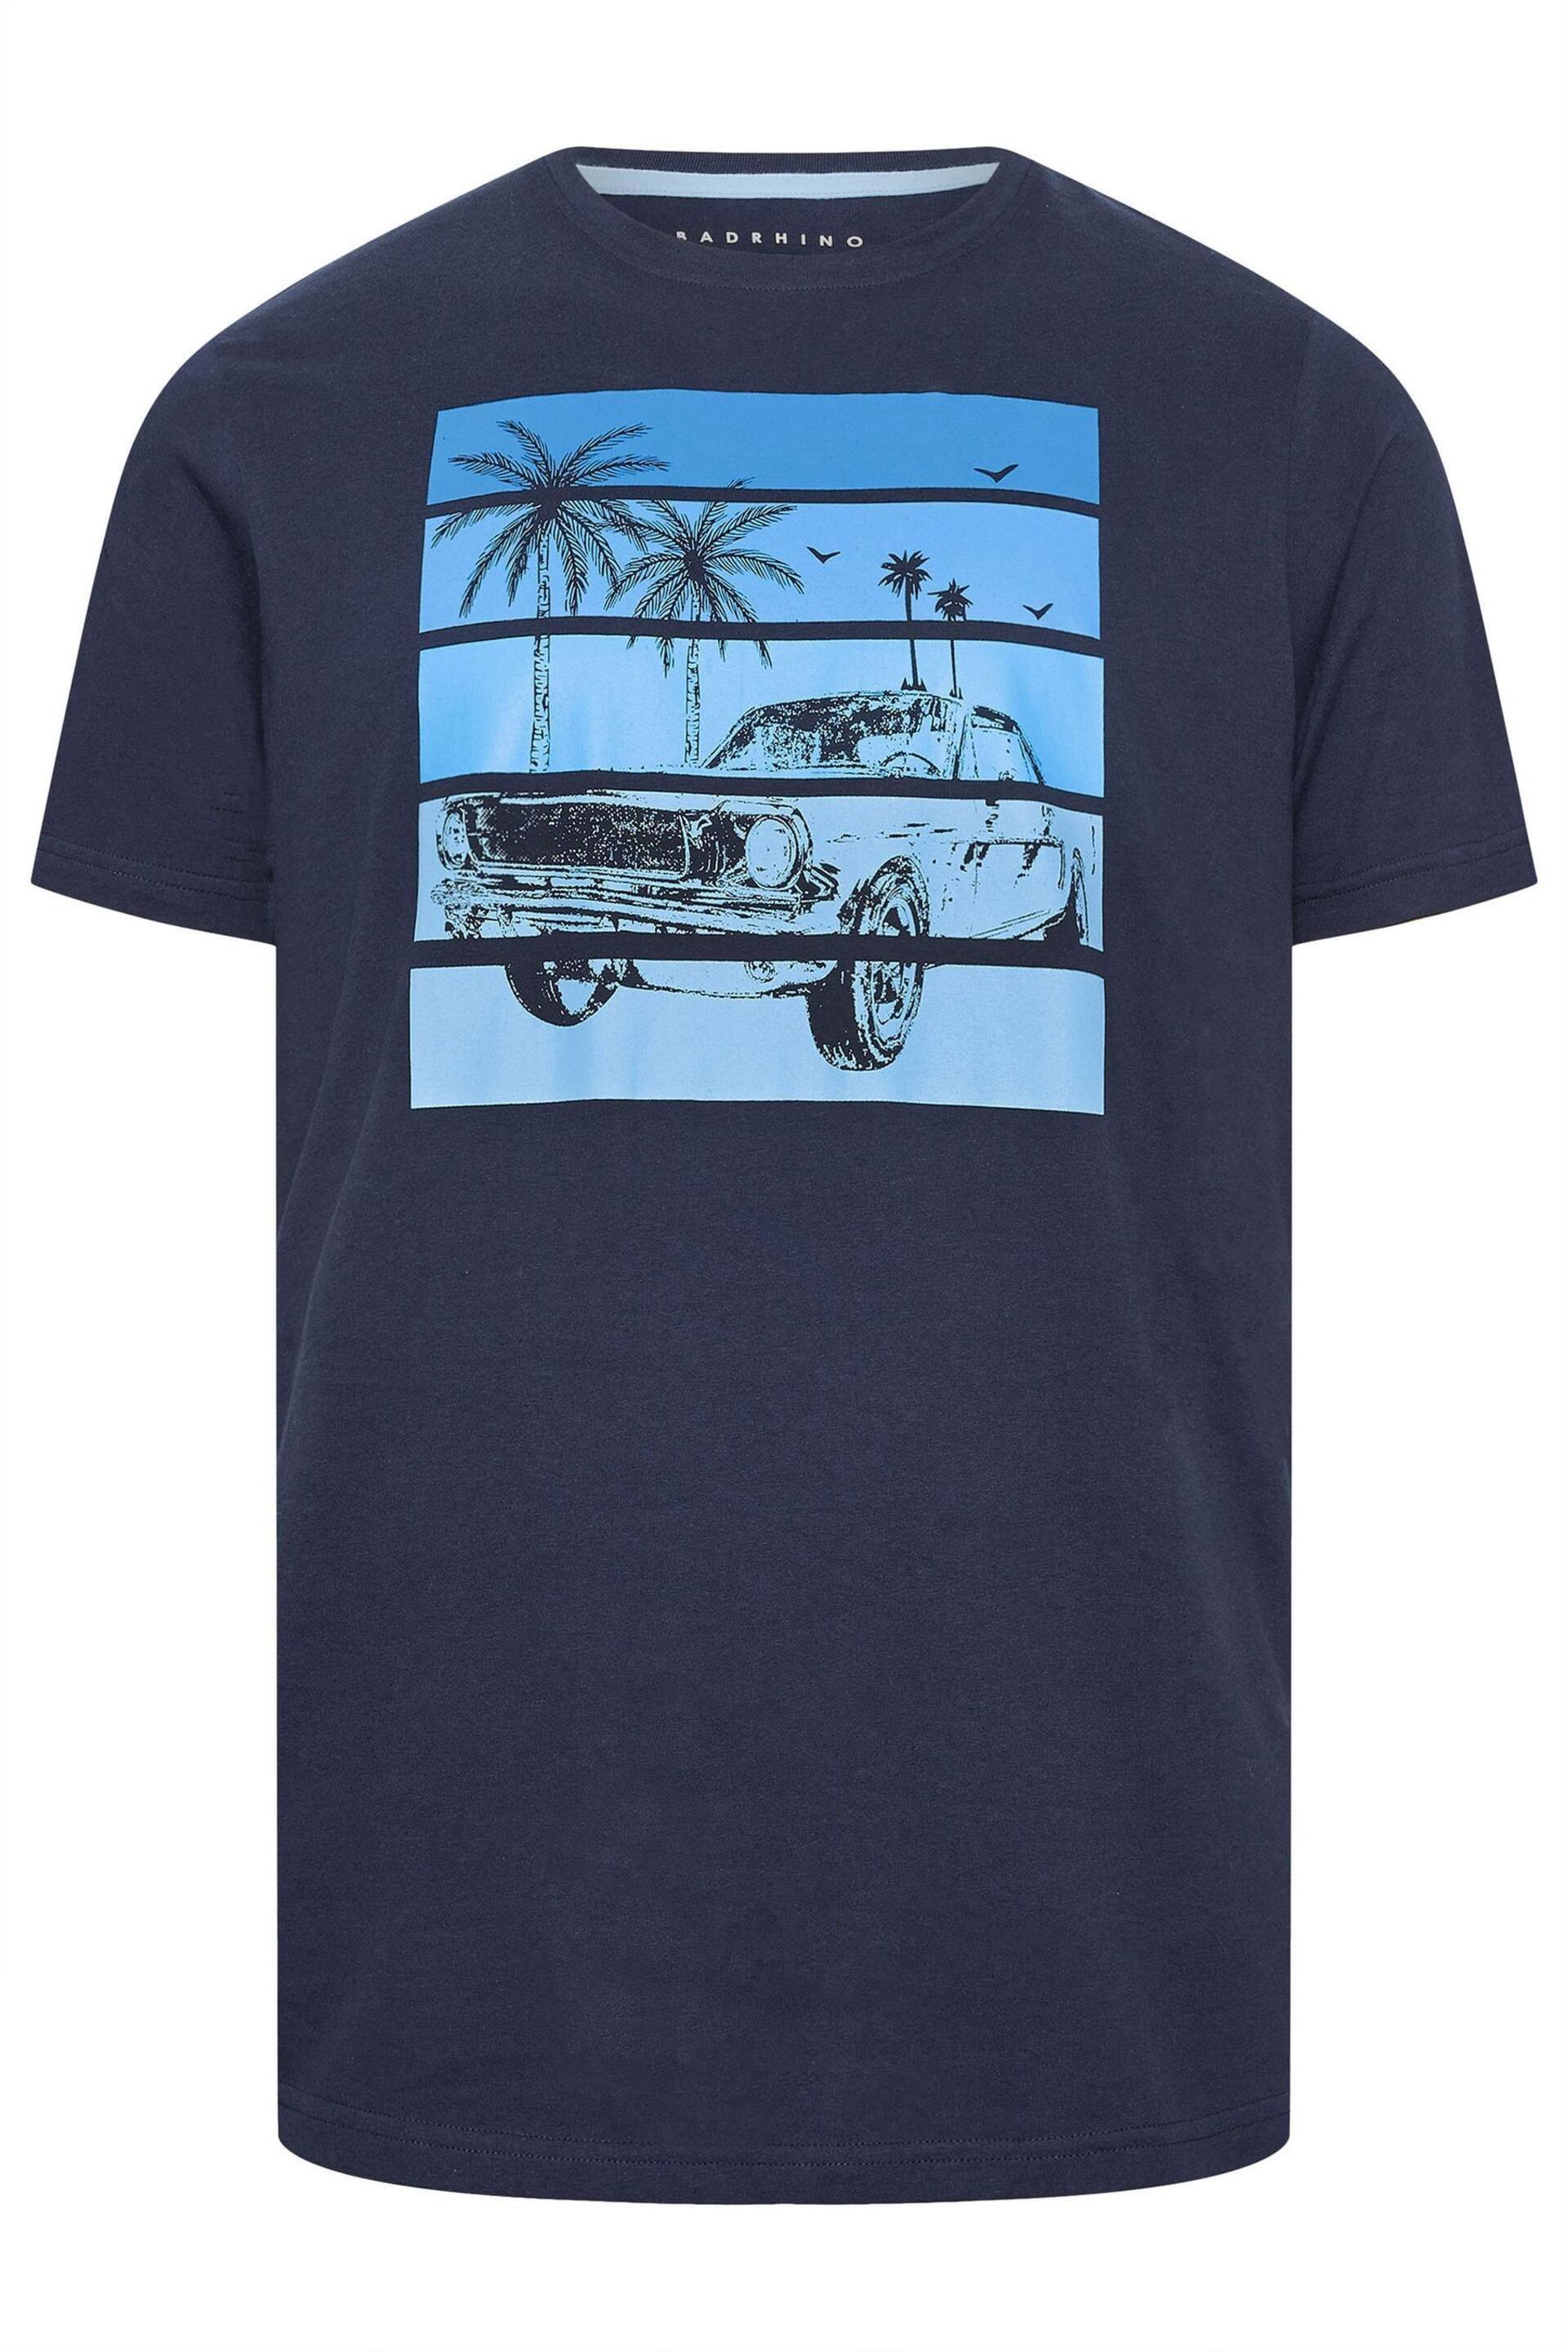 BadRhino Big & Tall Navy Blue Car Print T-Shirt - Image 2 of 3